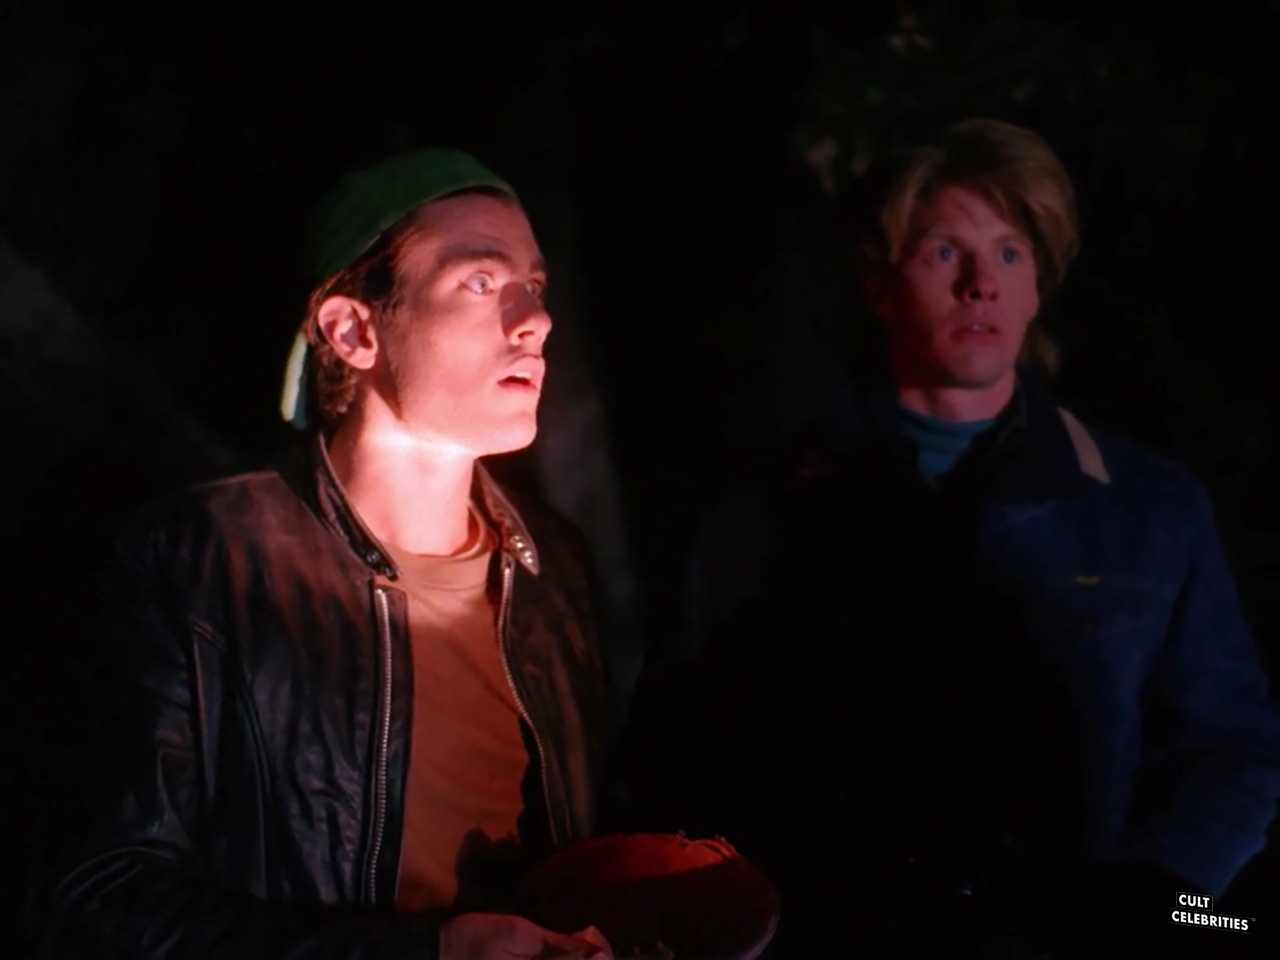 Dana Ashbrook and Gary Hershberger in Twin Peaks (1990)